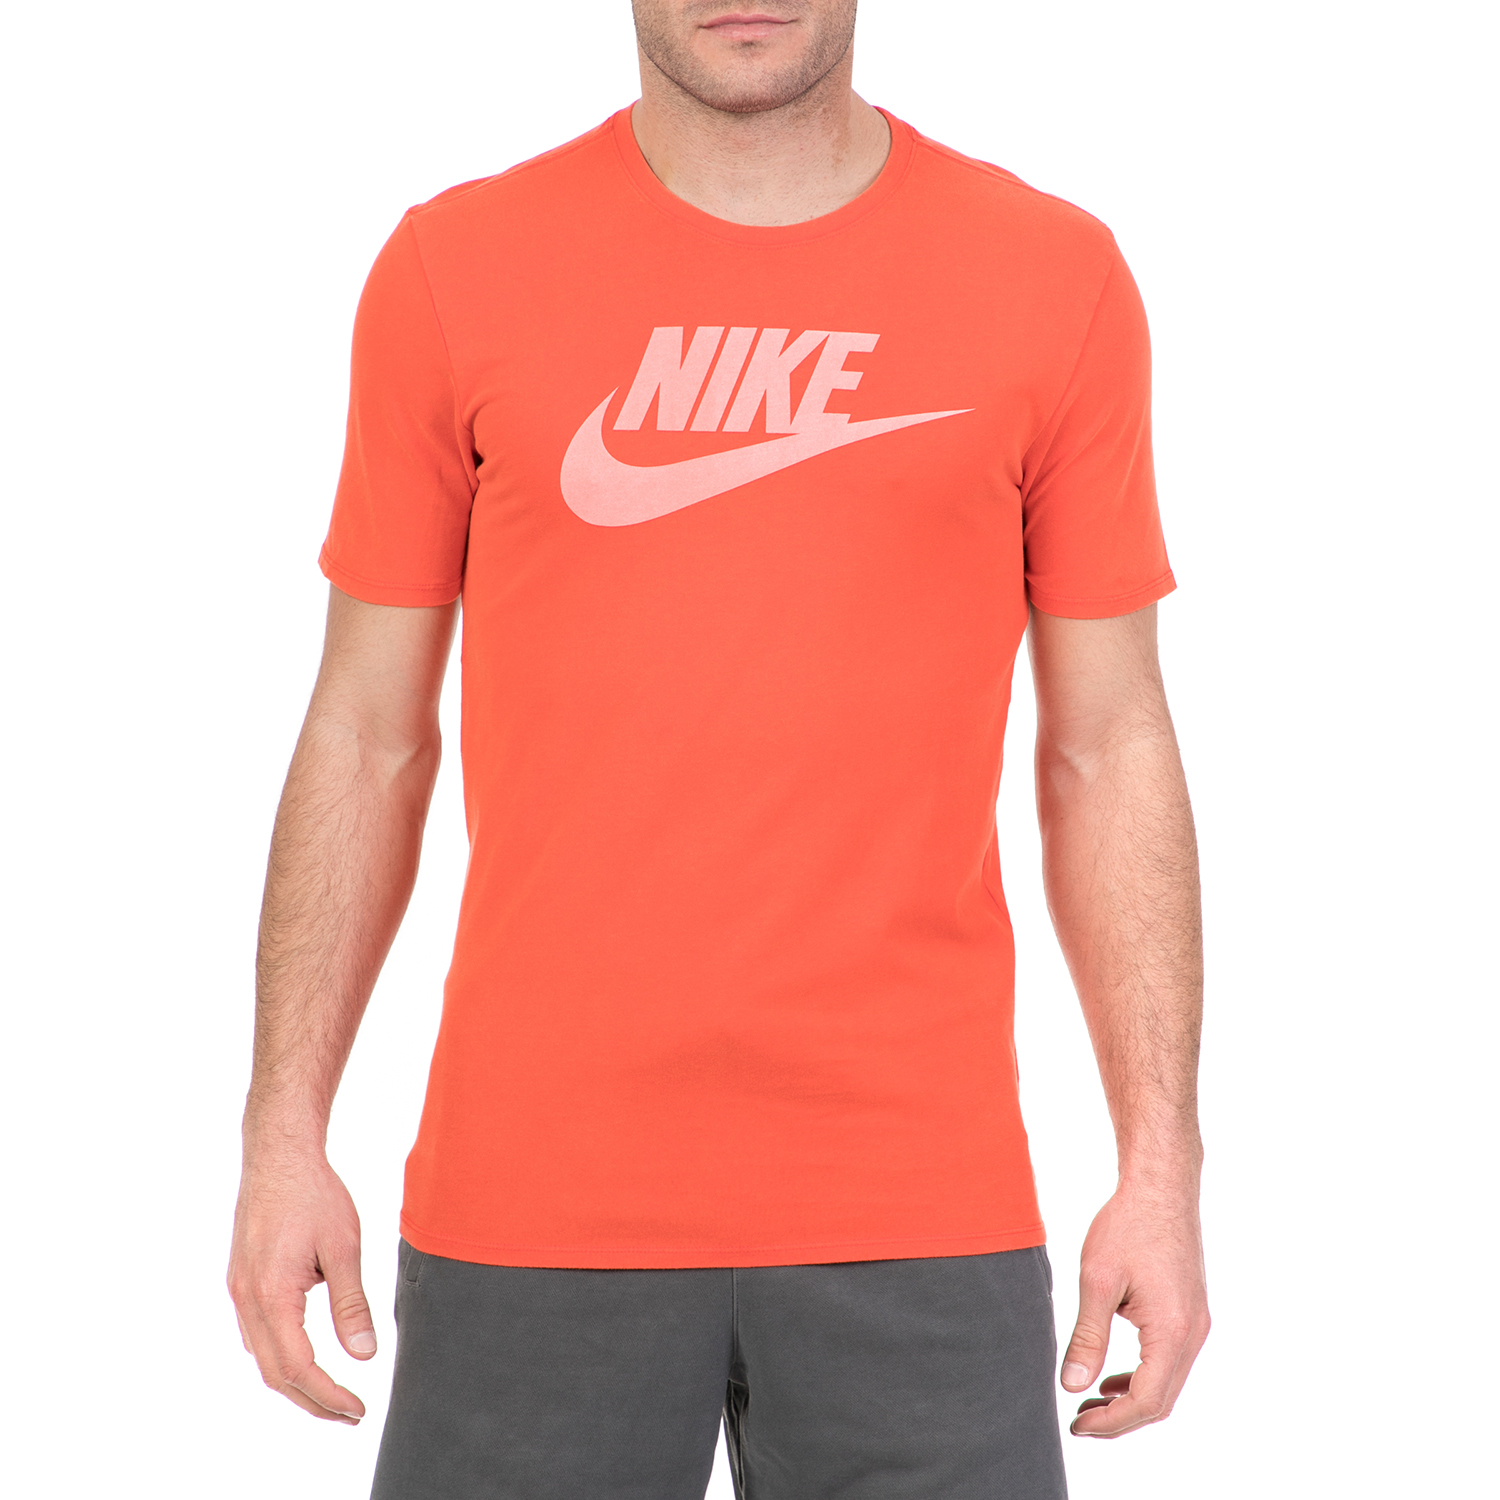 NIKE - Aνδρικό t-shirt NIKE Sportswear Tee Wash Pack 1 κόκκινη Ανδρικά/Ρούχα/Αθλητικά/T-shirt